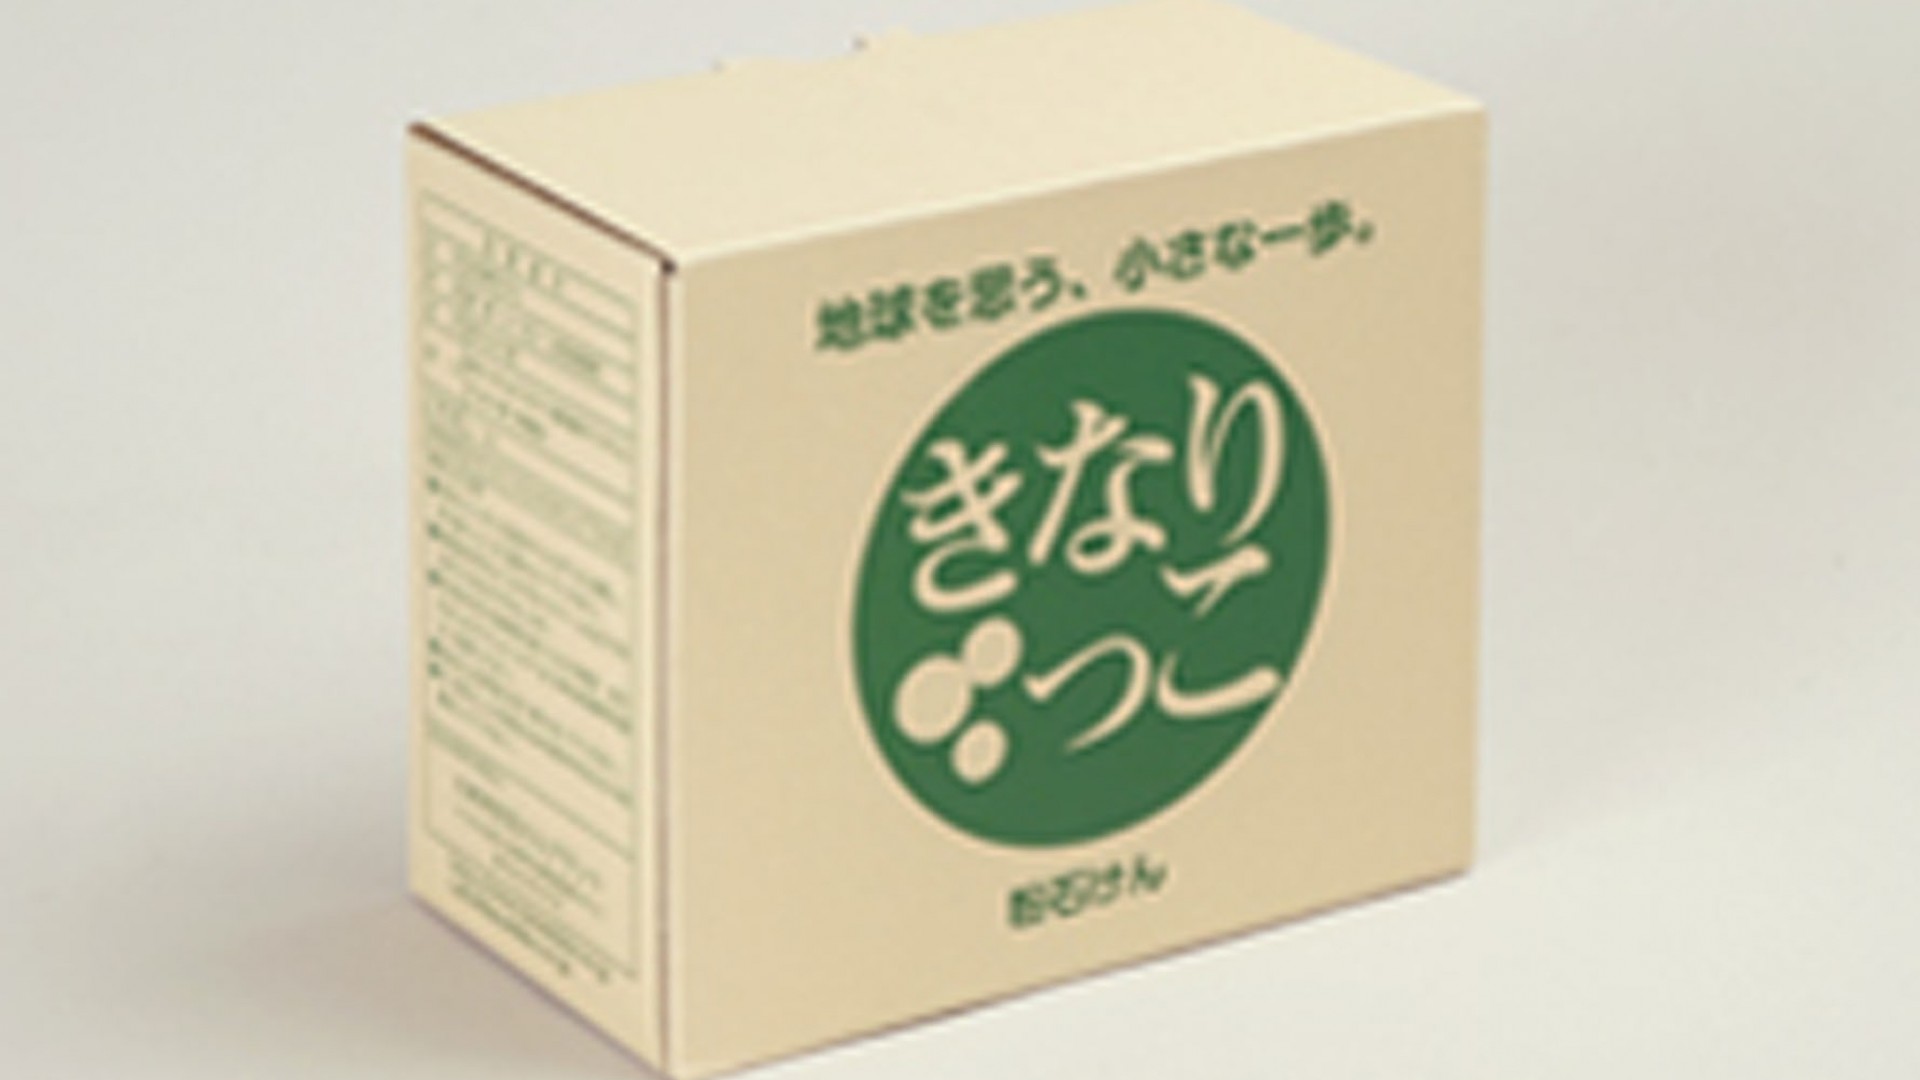 Kawasaki Citizens Soap Plant